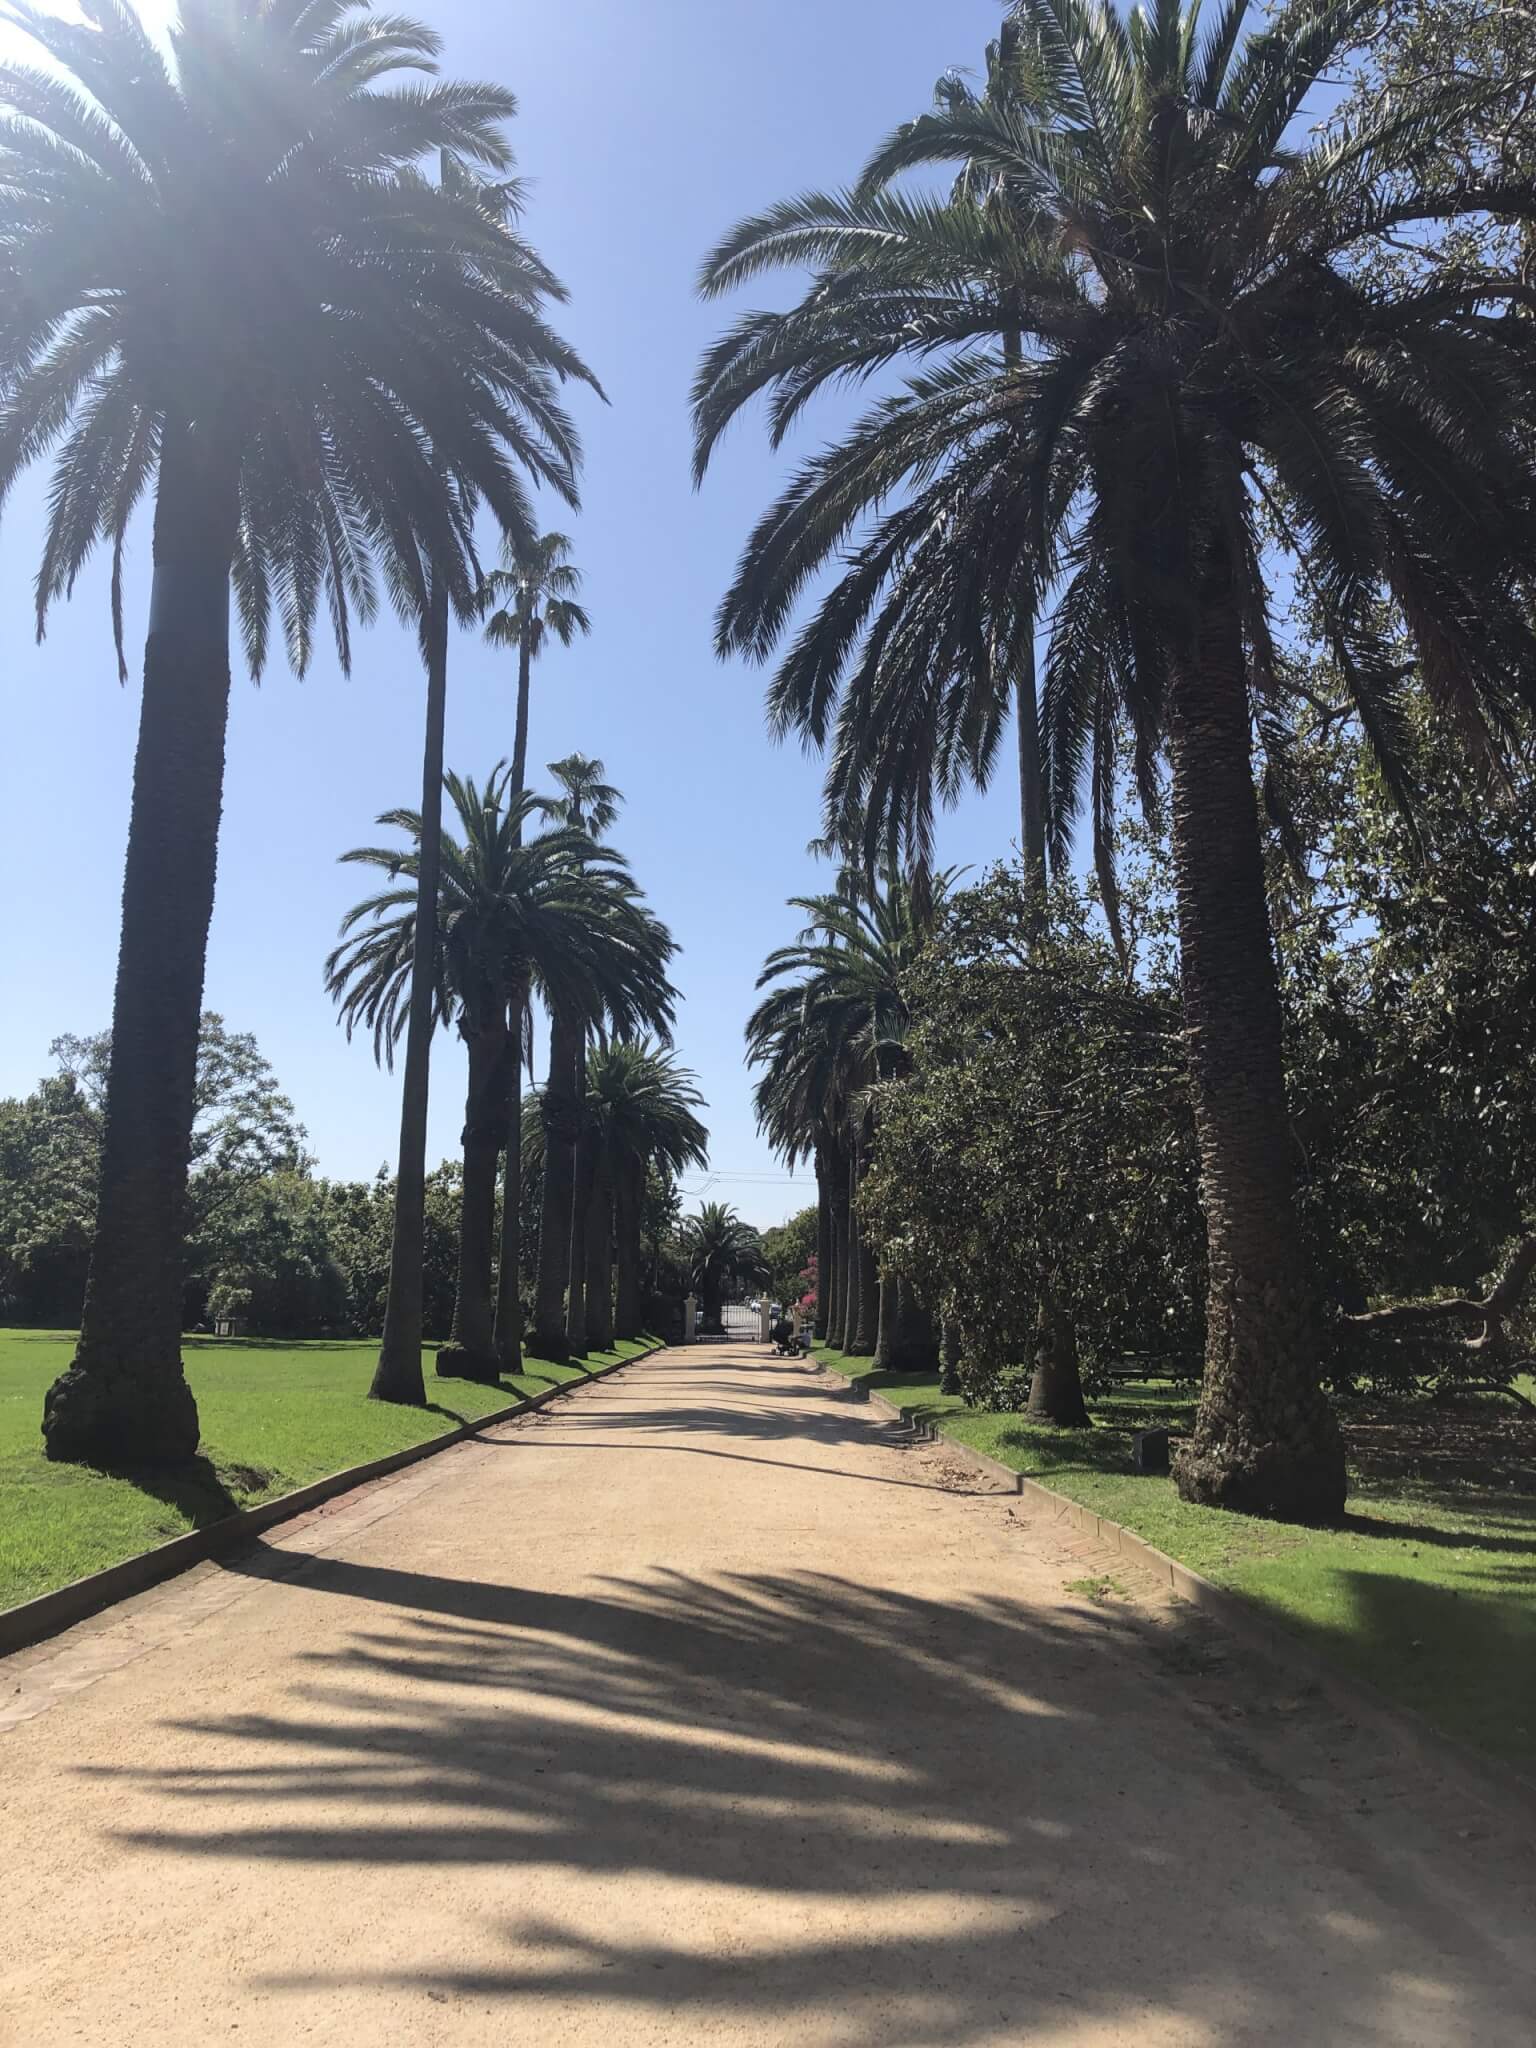 St Kilda botanical Gardens in Melbourne, Australia